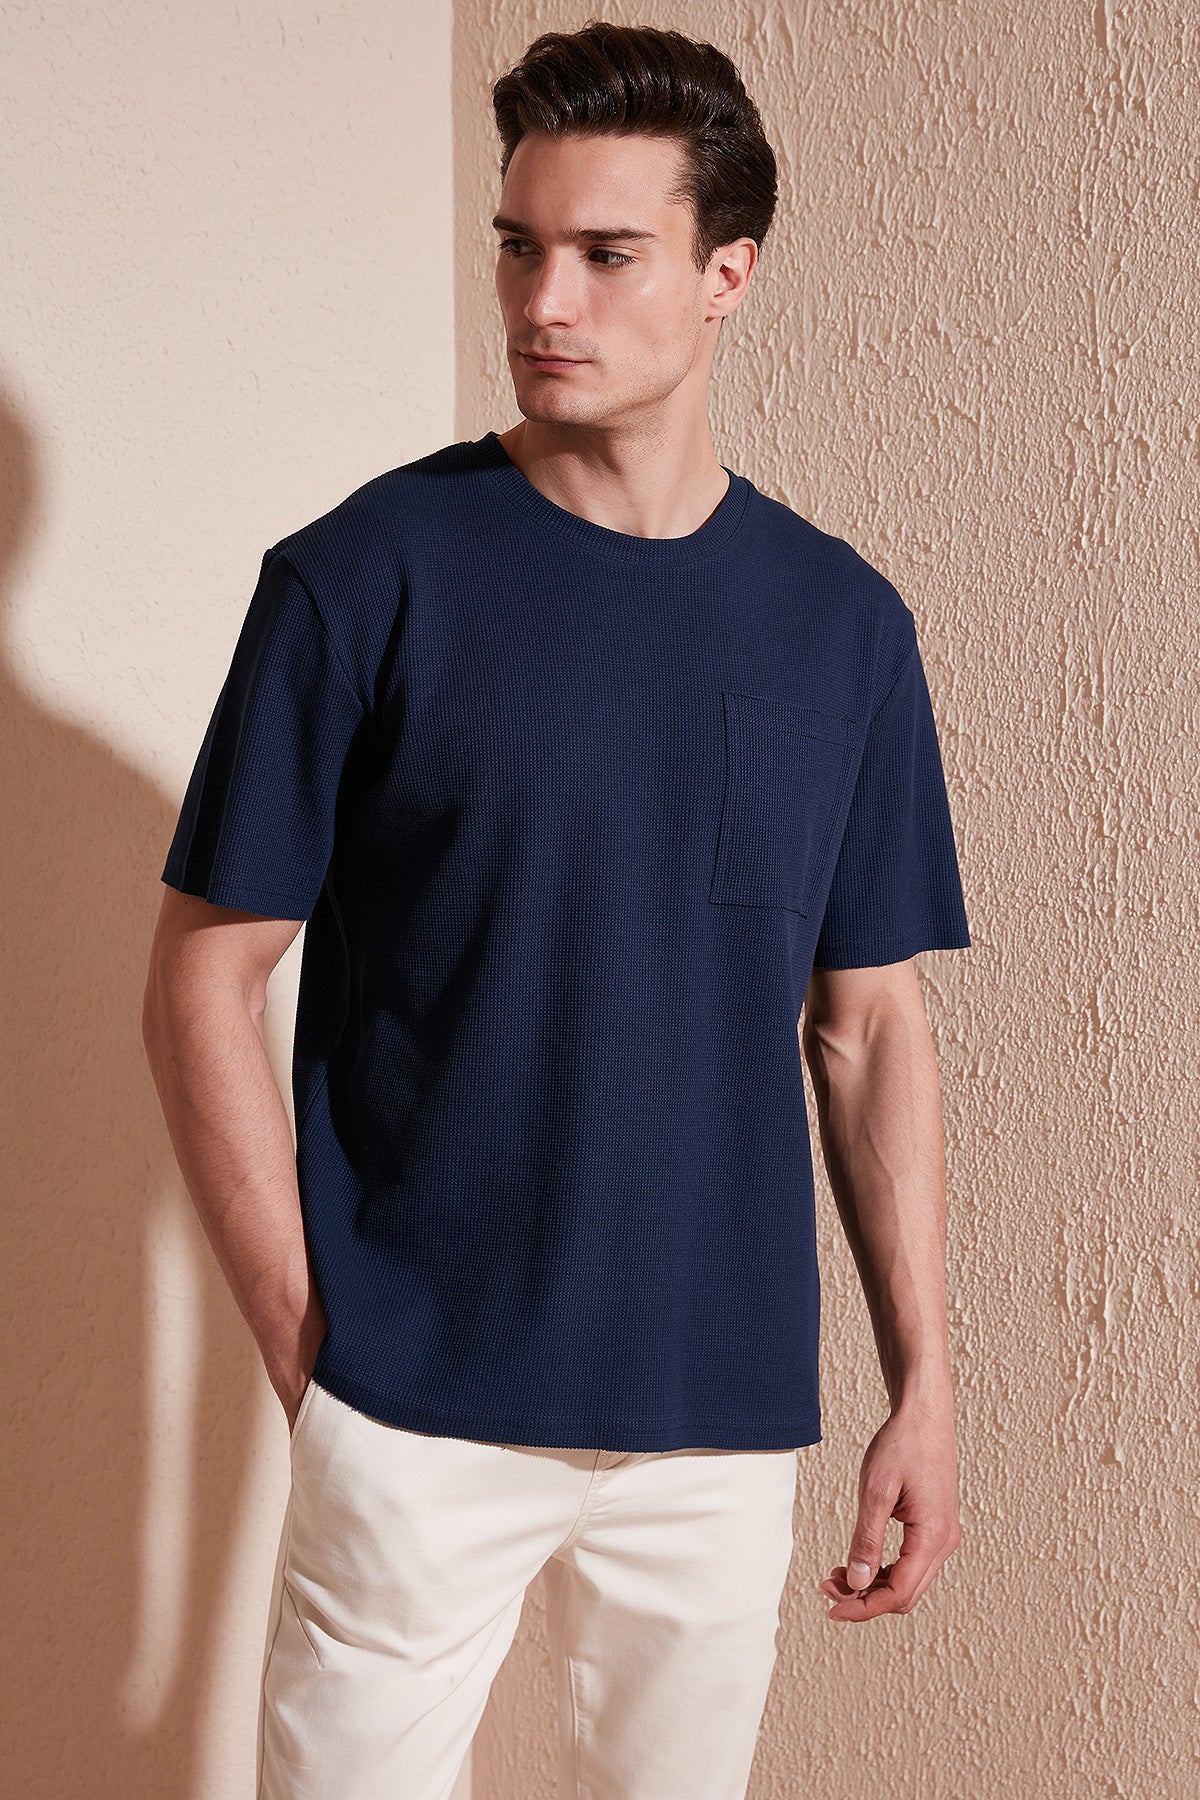 Buratti Cotton Comfy Cut Single Pocket Crew Neck Men's T Shirt - STONE